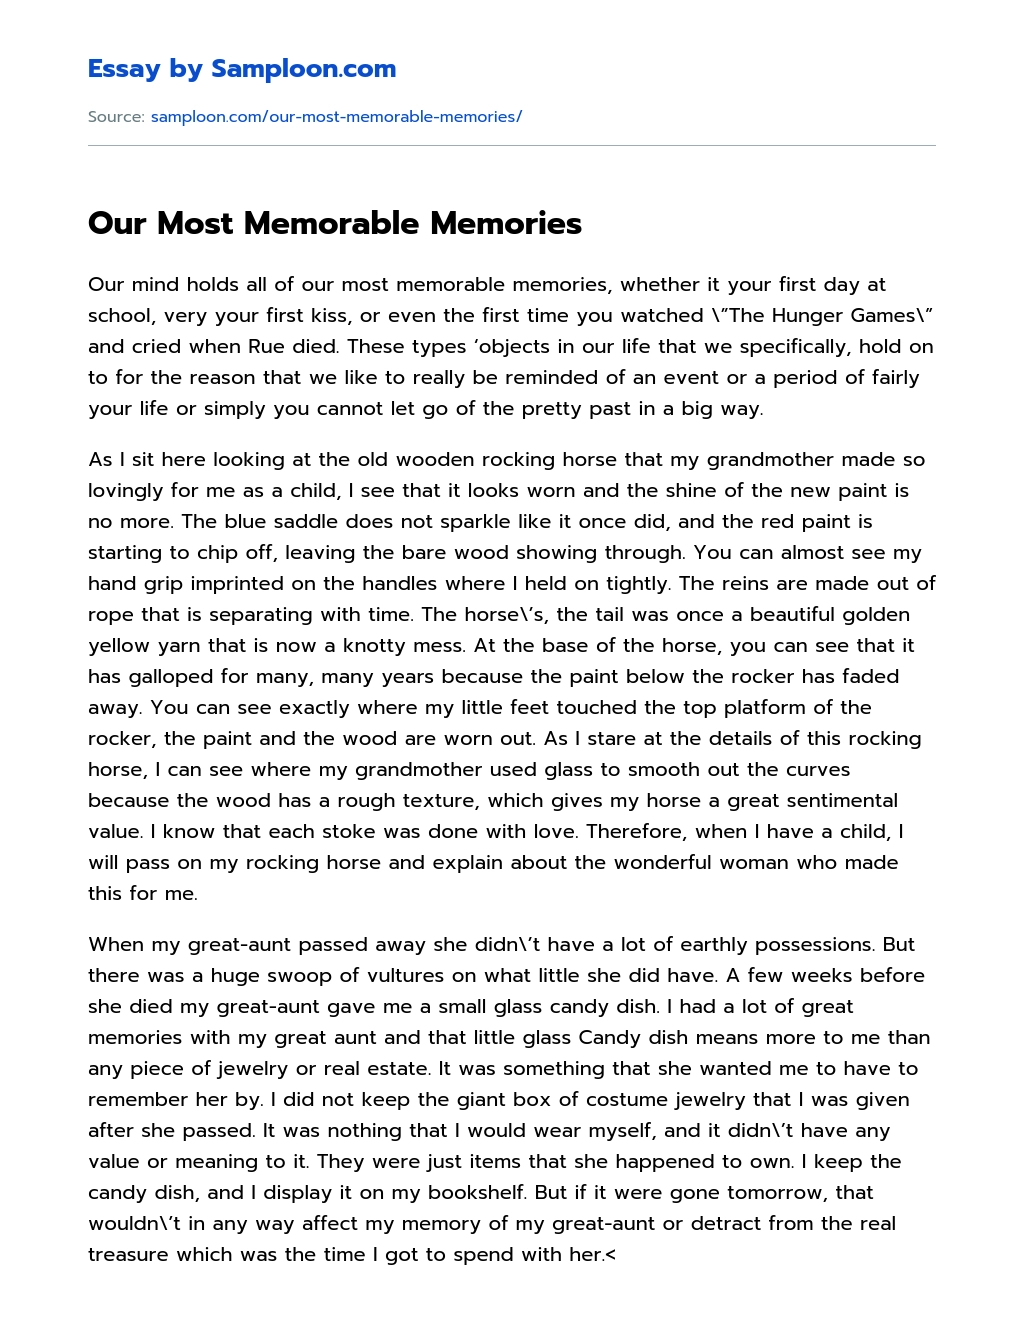 Our Most Memorable Memories essay